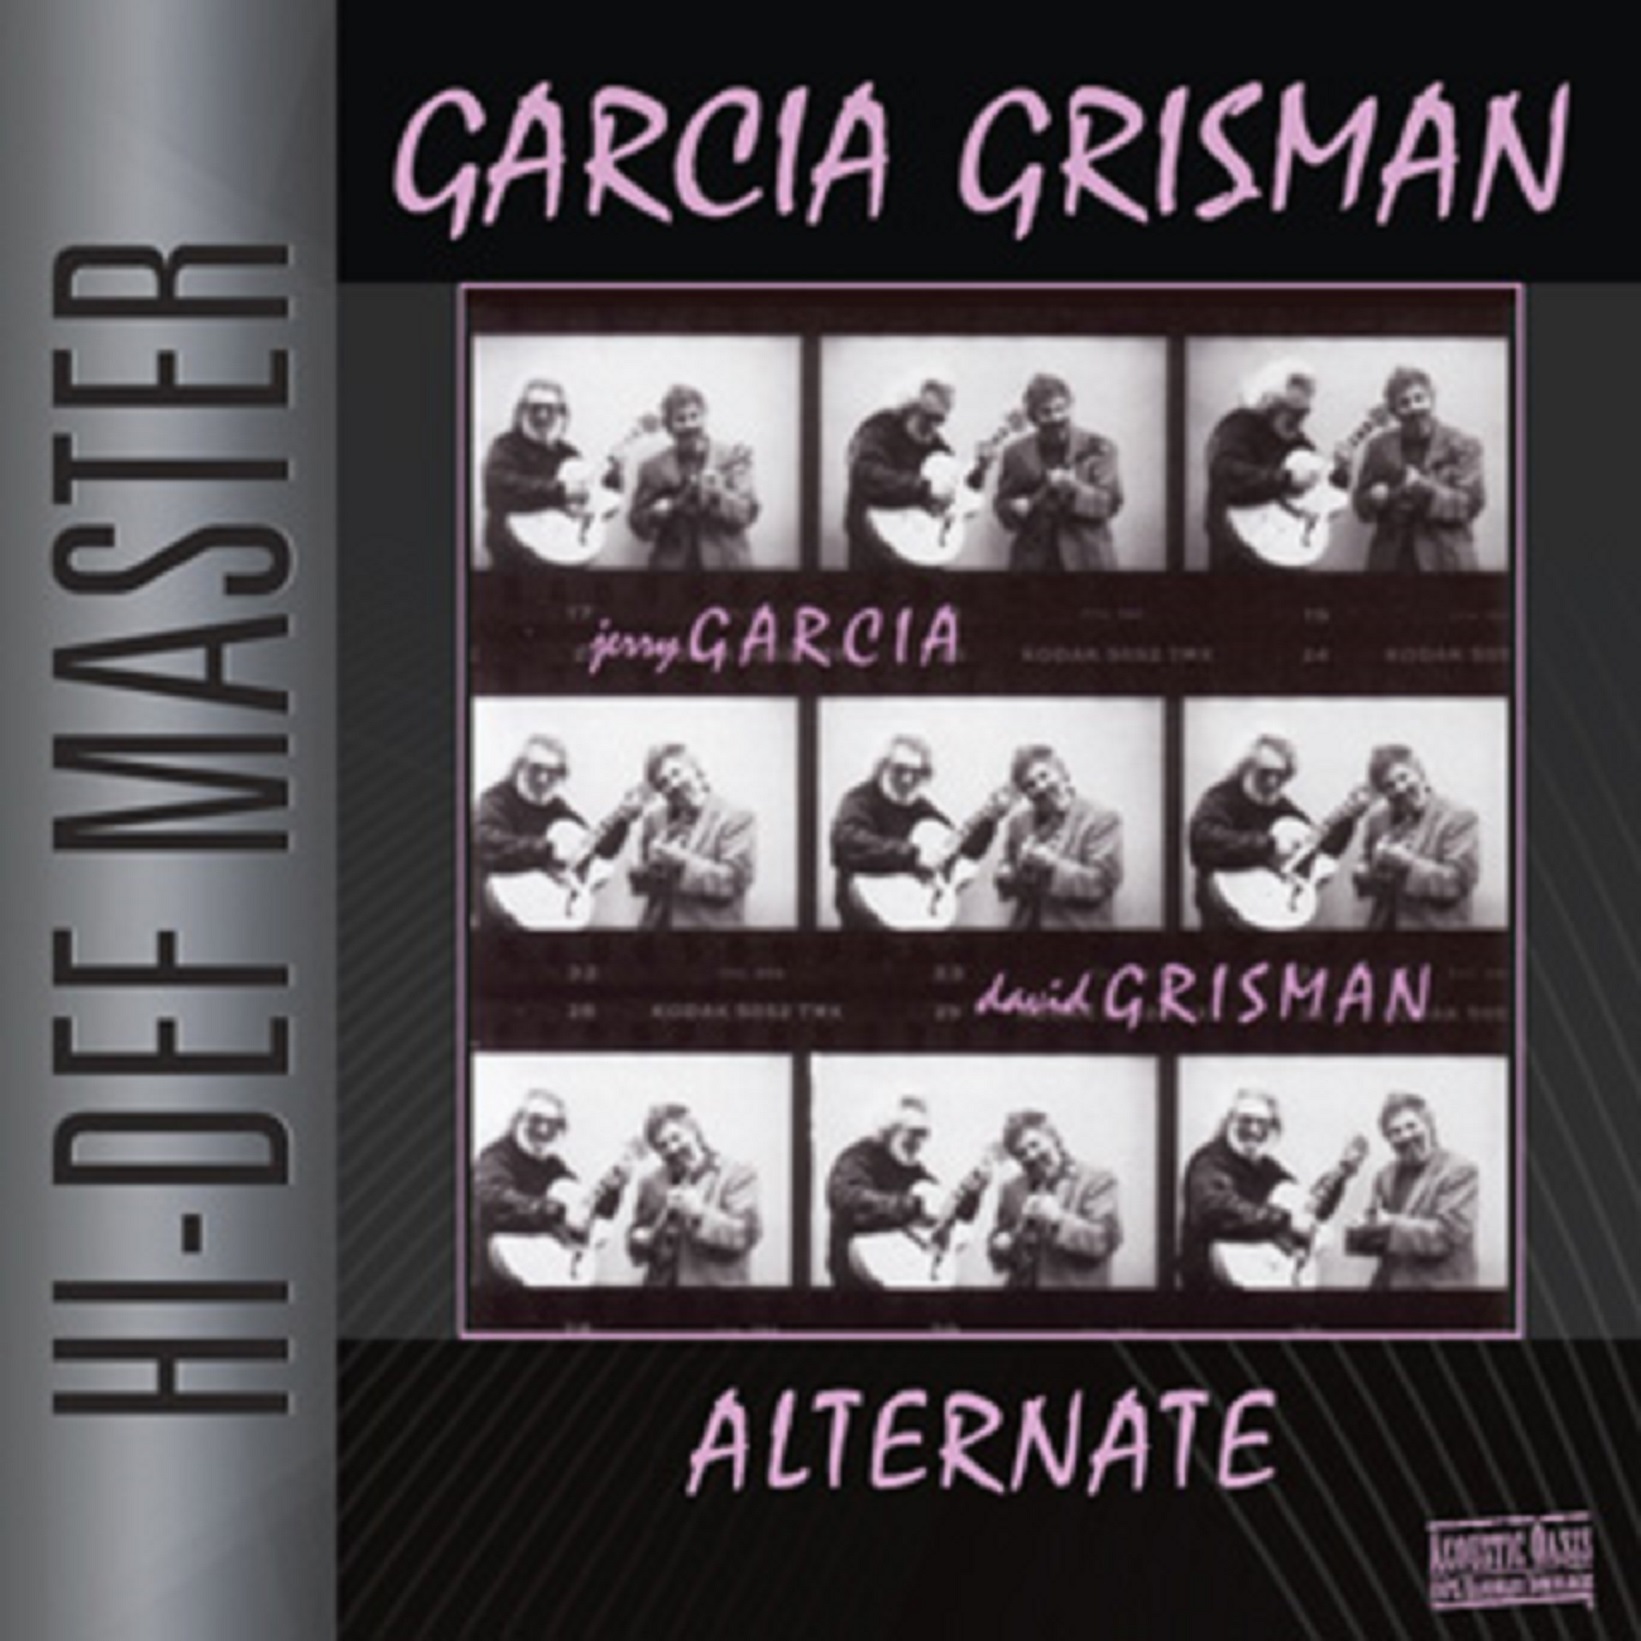 David Grisman updates the Garcia/Grisman classic, Grateful Dawg